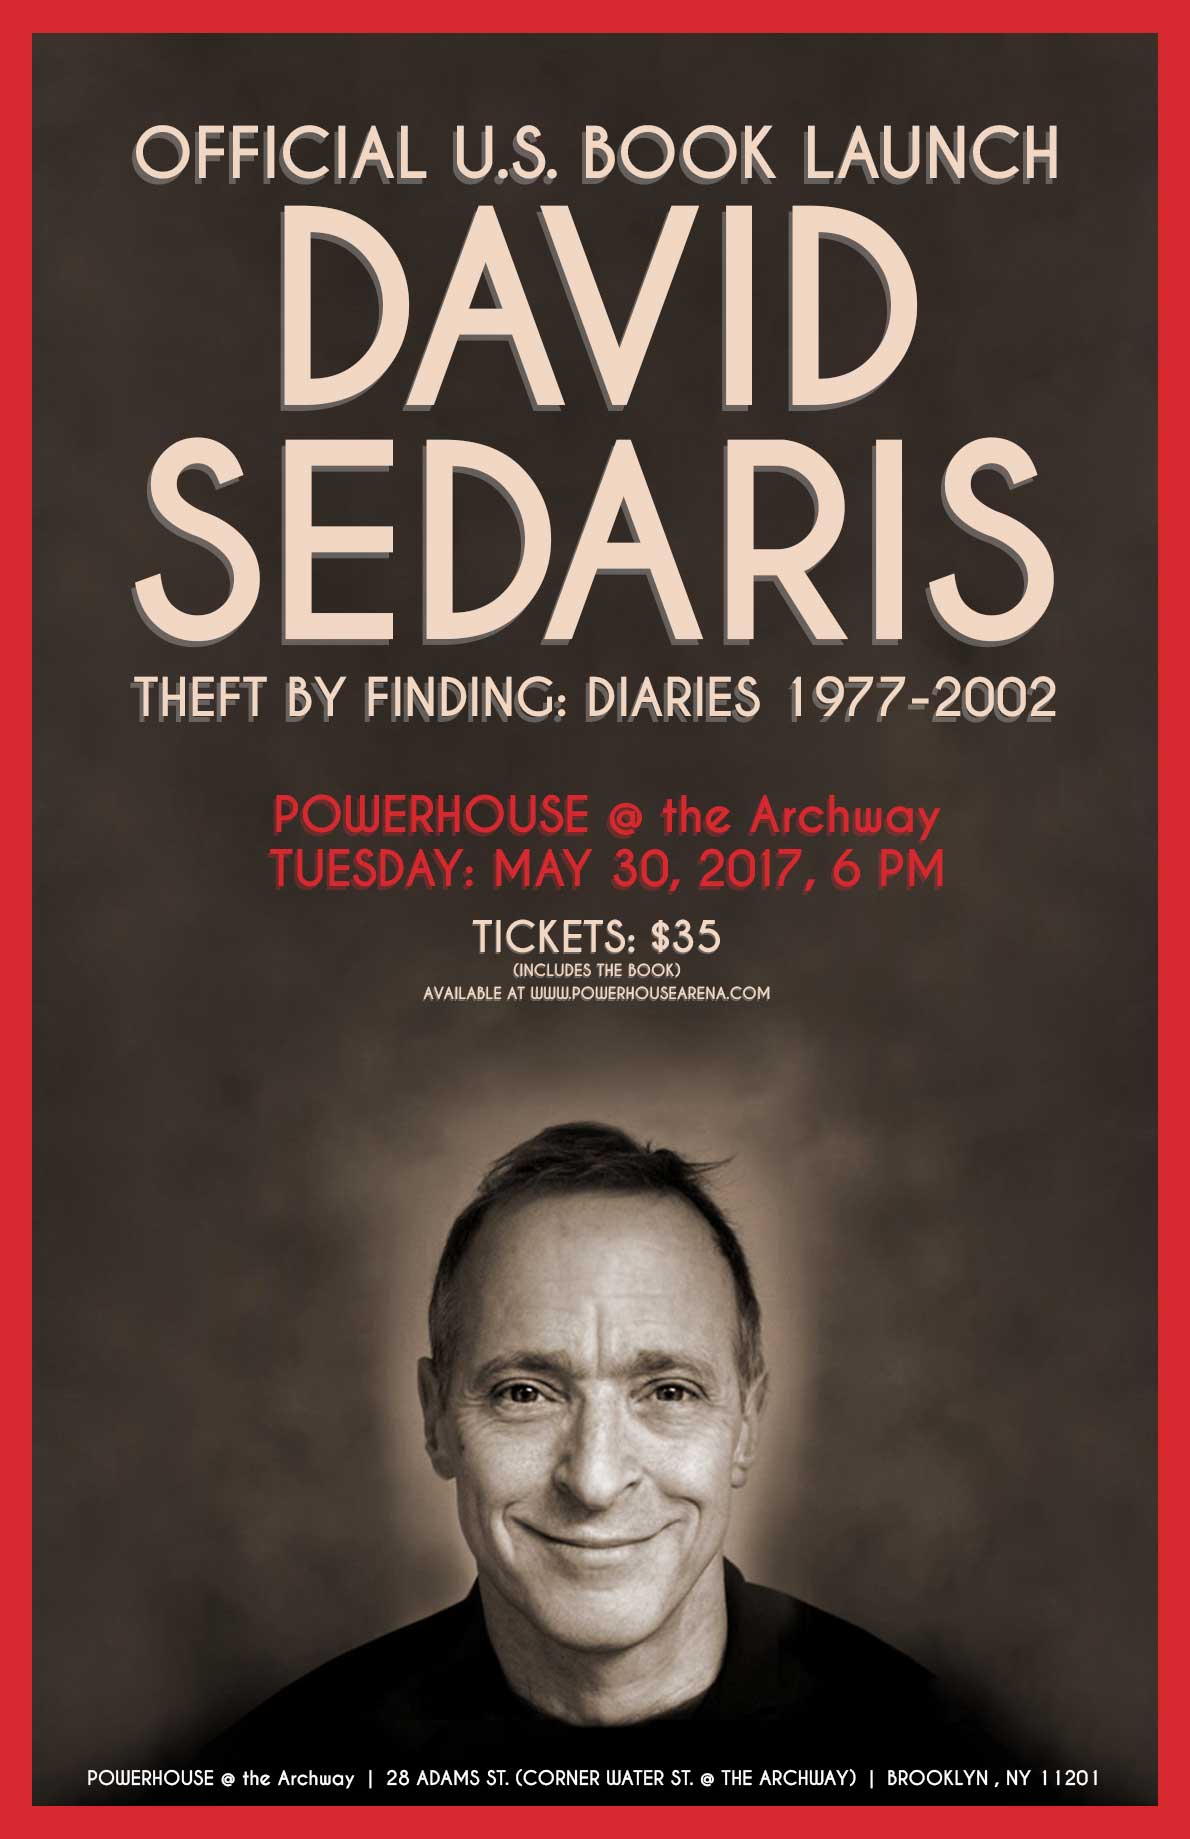 U.S. BOOK LAUNCH: THEFT BY FINDING: DIARIES 1977-2002 by David Sedaris